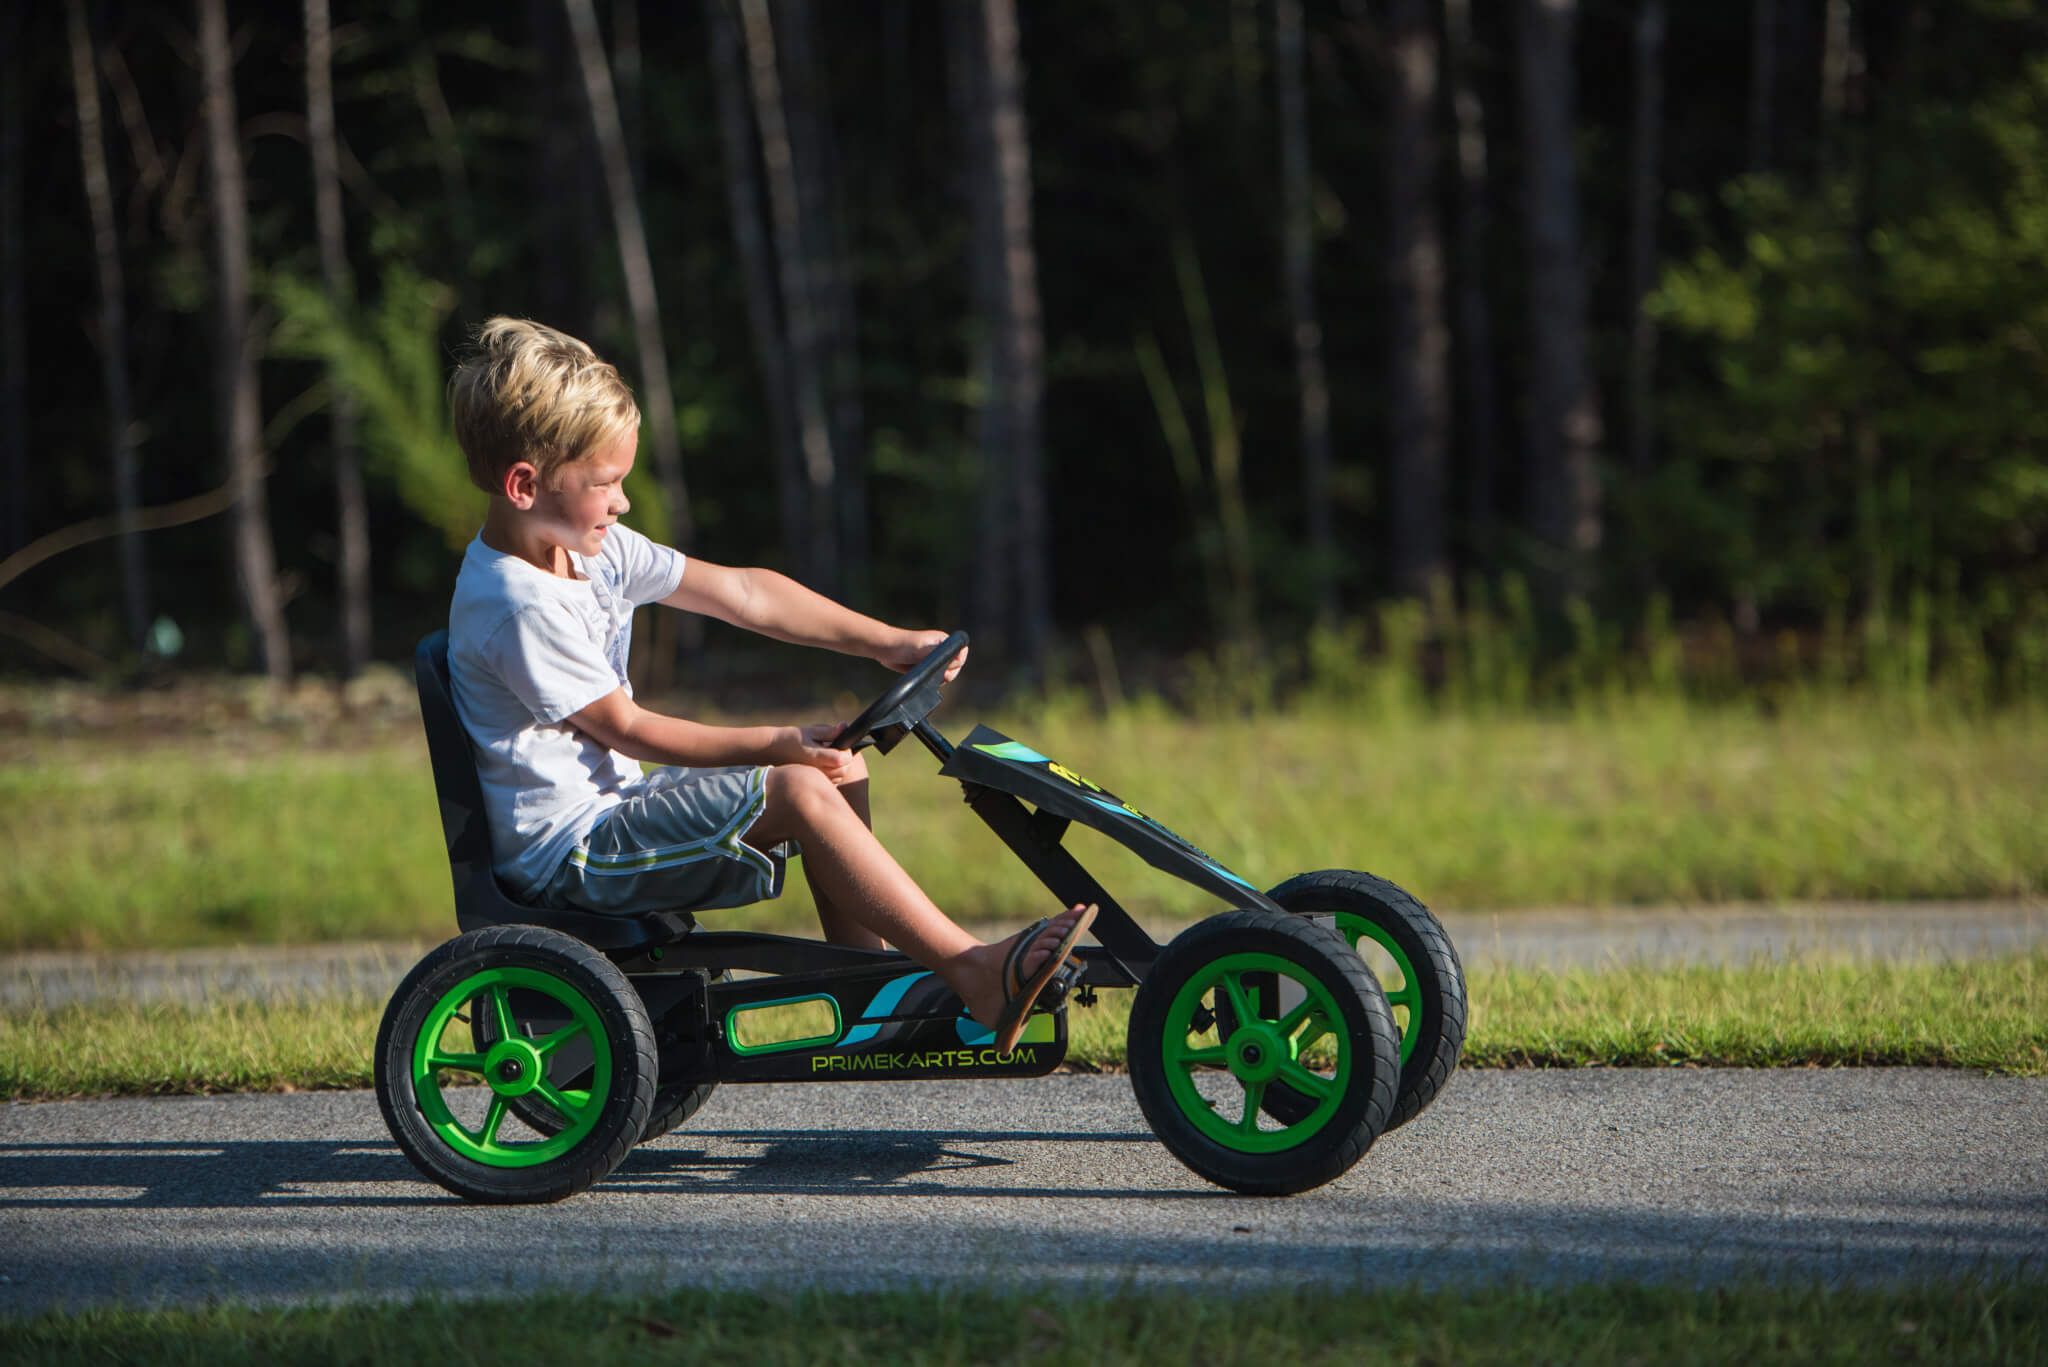  Prime Karts 4-Wheel Trailblazer Pedal Kart : Automotive